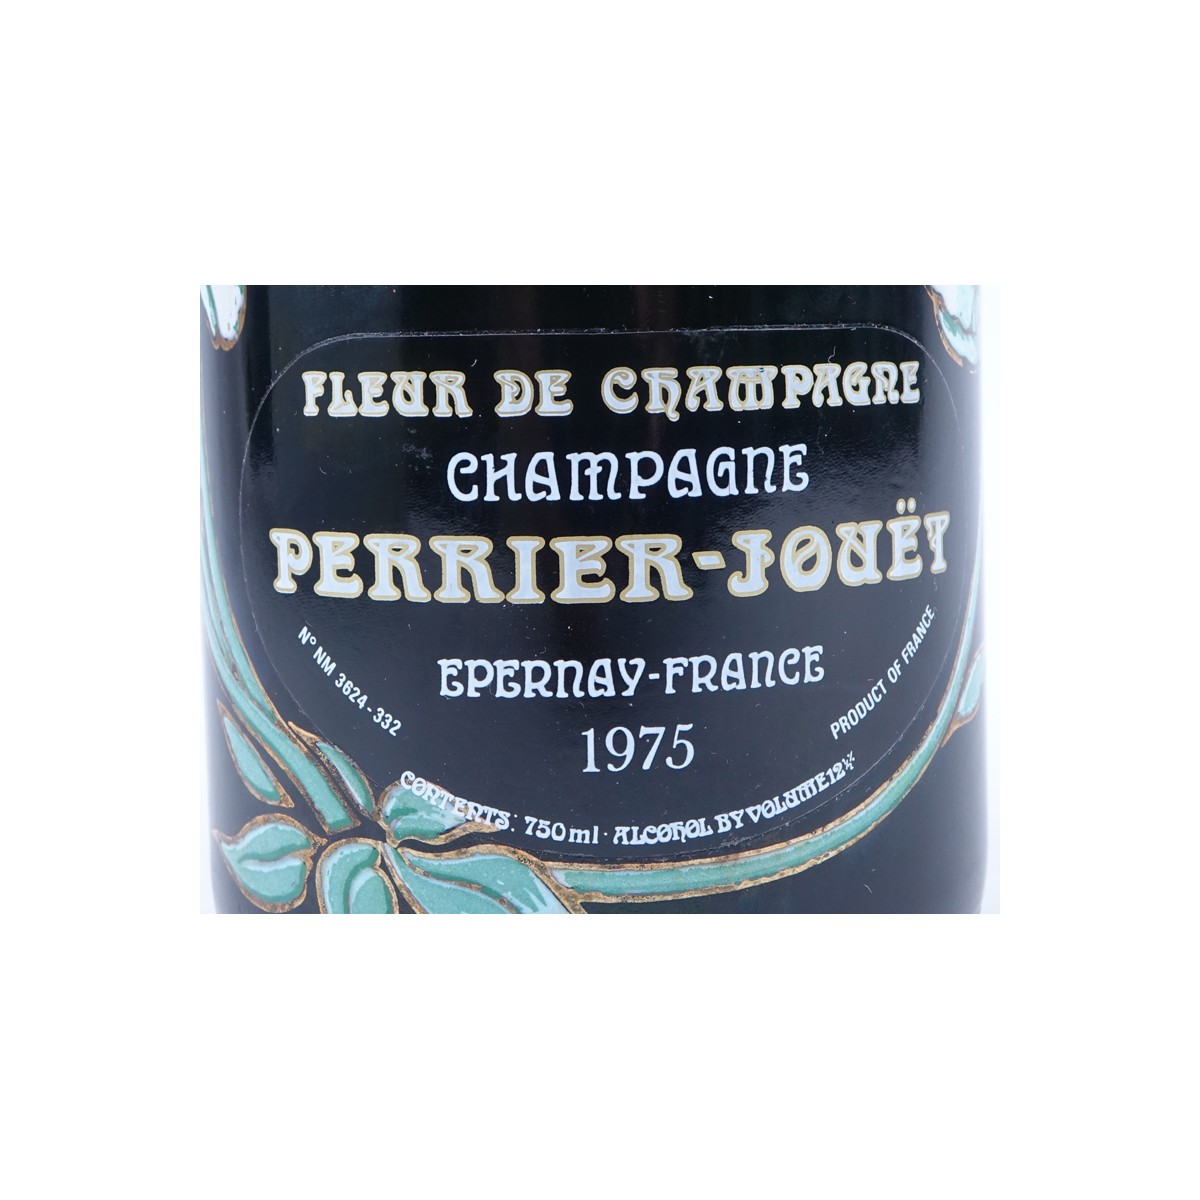 Vintage 1975 Perrier-Jouet Fleur de Champagne Bottle in Presentation Box. Includes two crystal cham